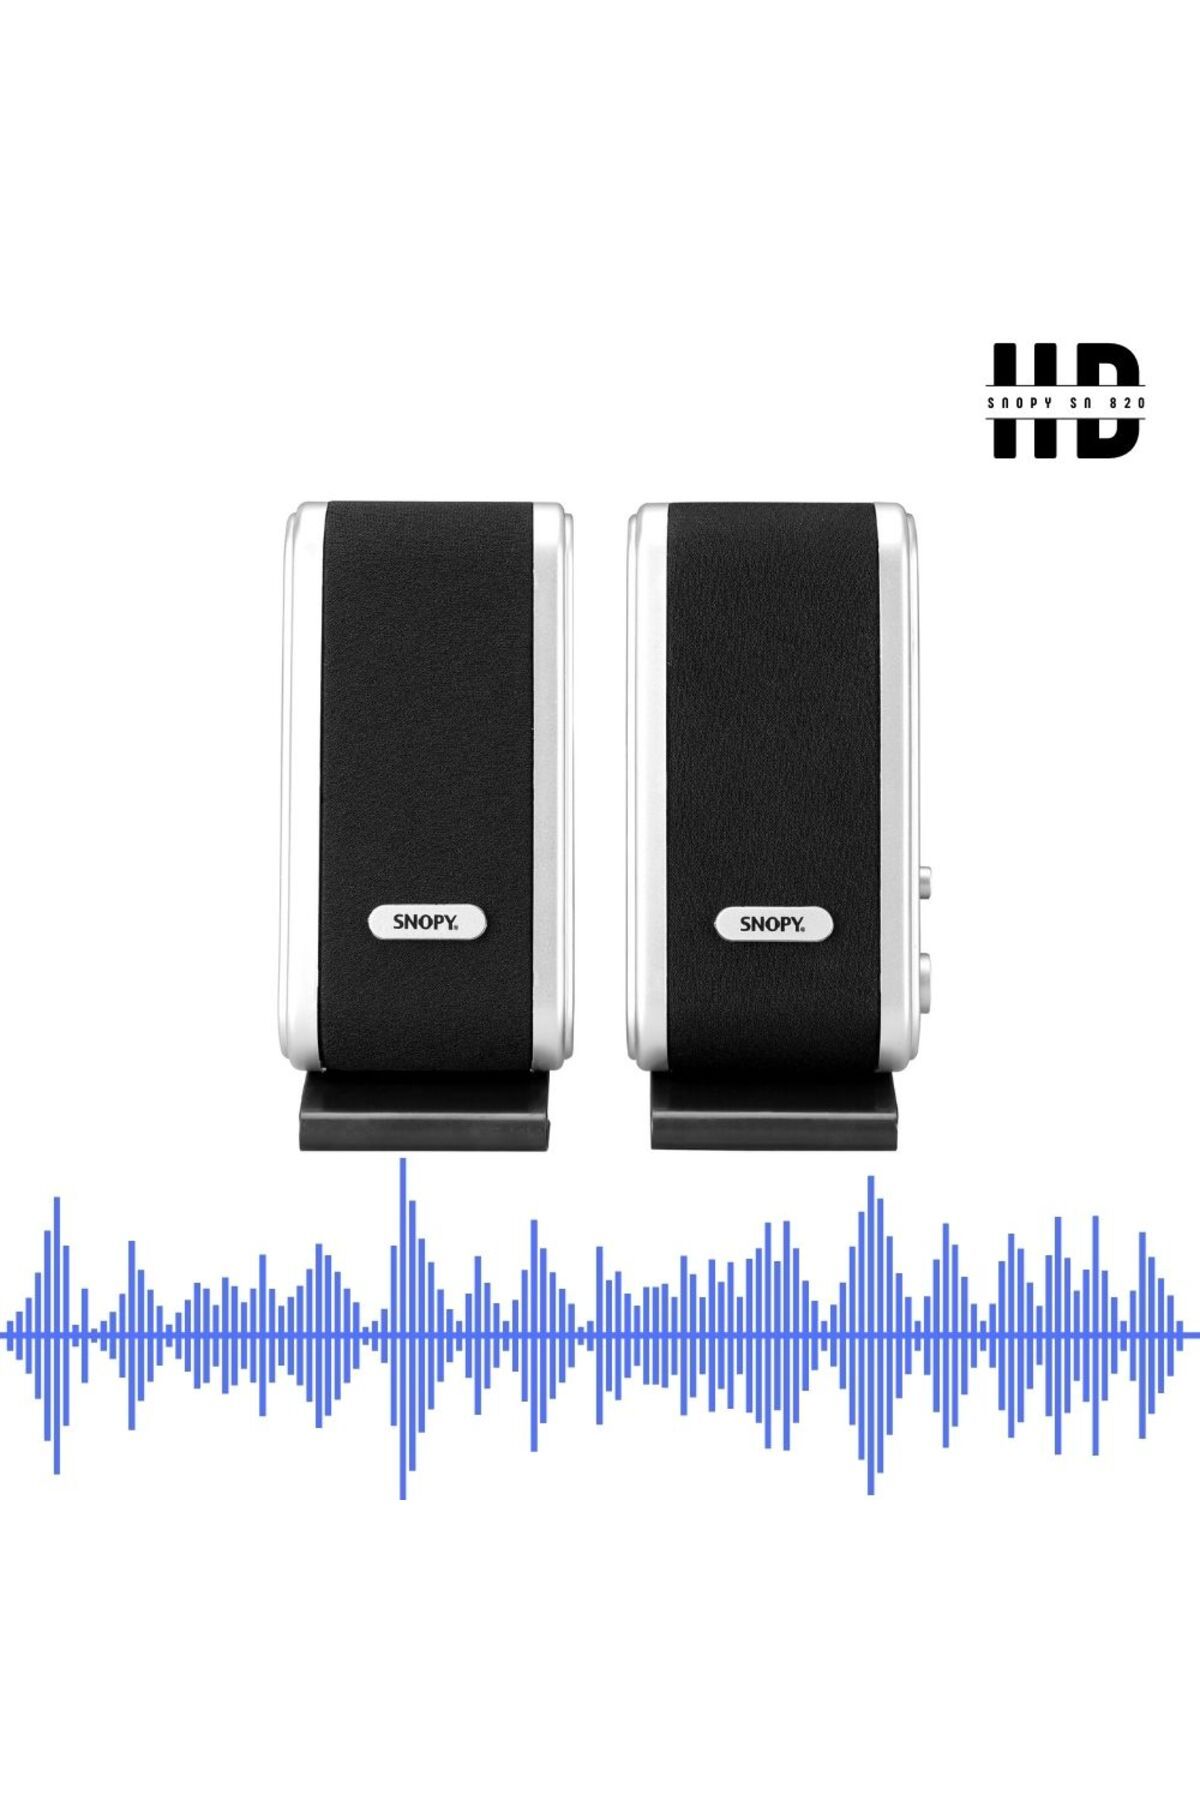 Snopy Sn-820 2.0 Siyah/gümüş Lcd Ince Tasarım Usb Speaker